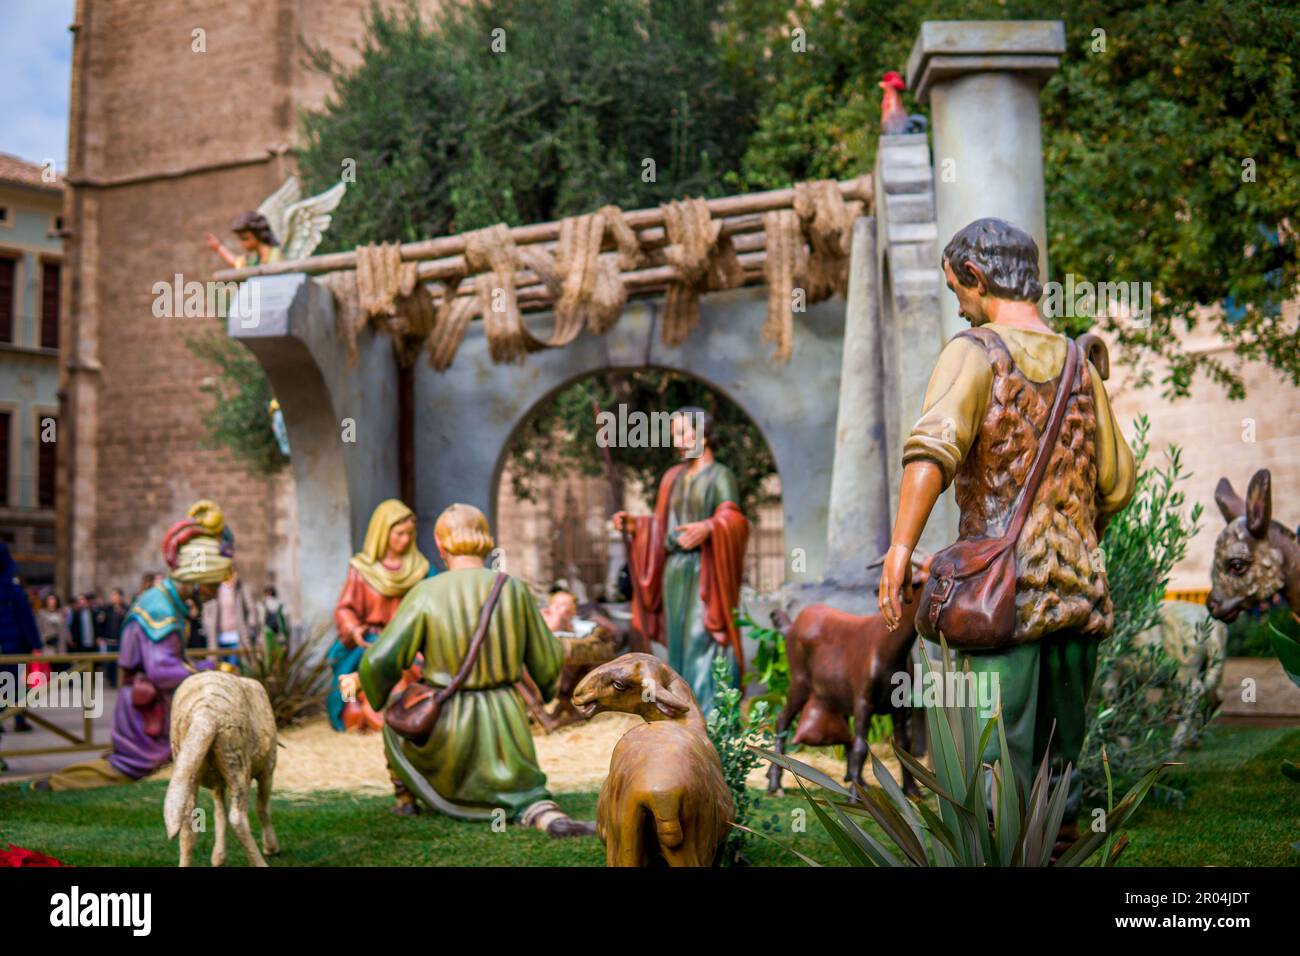 PIcture of Figures of the Christmas Nativity Scene in Plaza de la Reina Representing the Birth of Jesus Christ Stock Photo